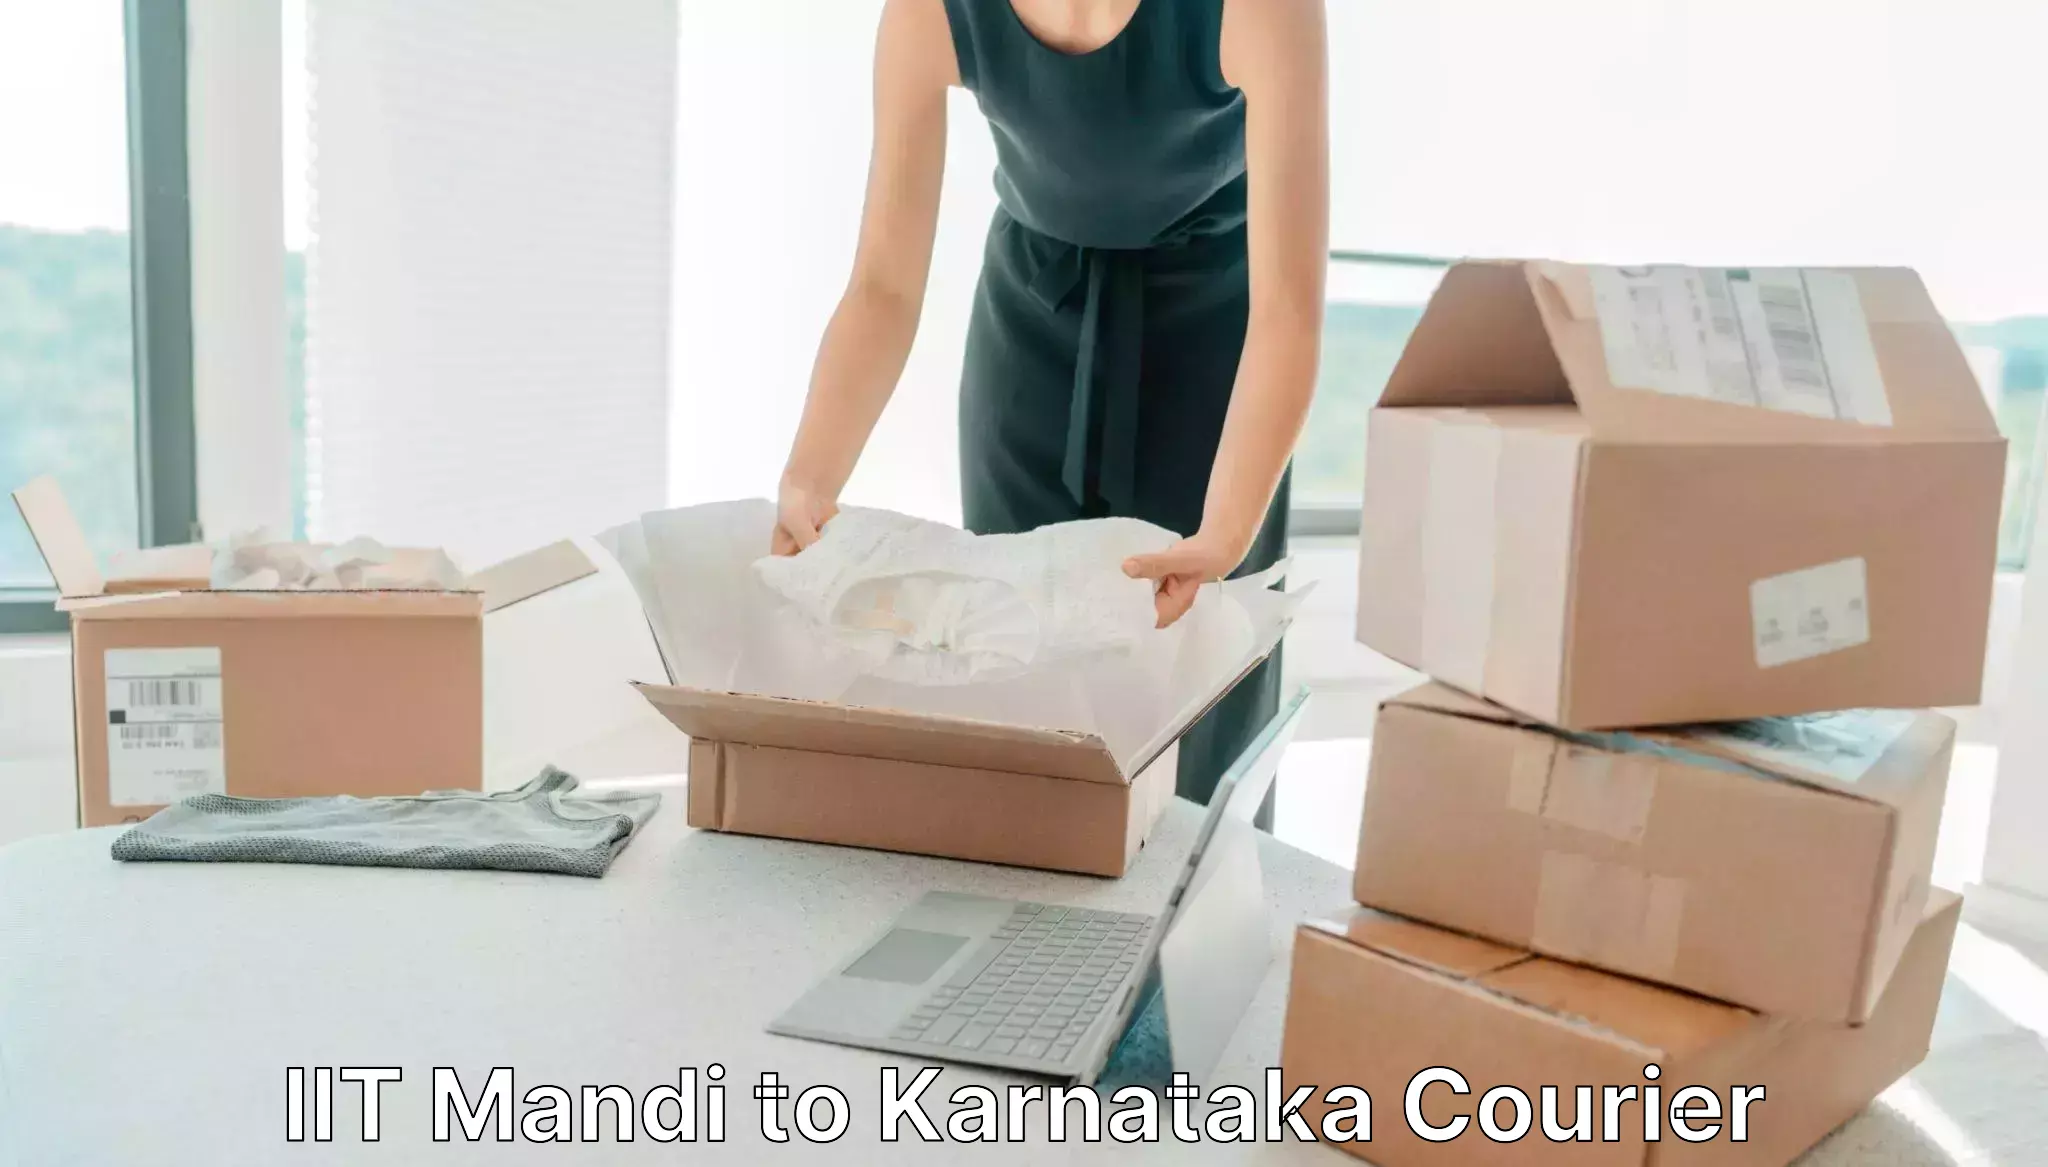 Full-service courier options IIT Mandi to Aland Kalaburagi